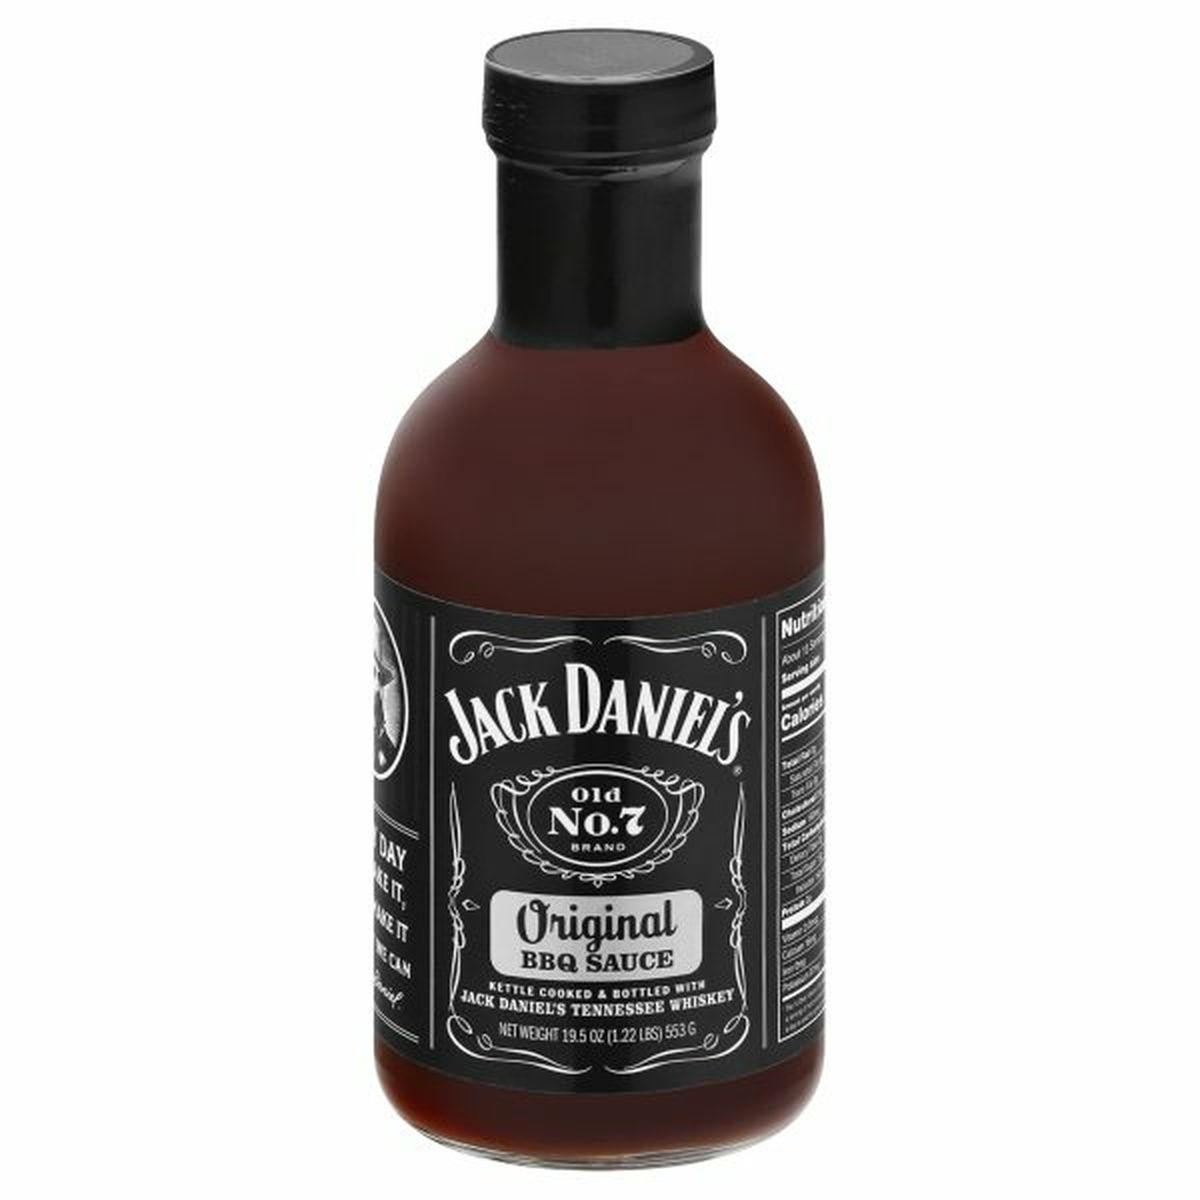 Calories in Jack Daniel's BBQ Sauce, Original